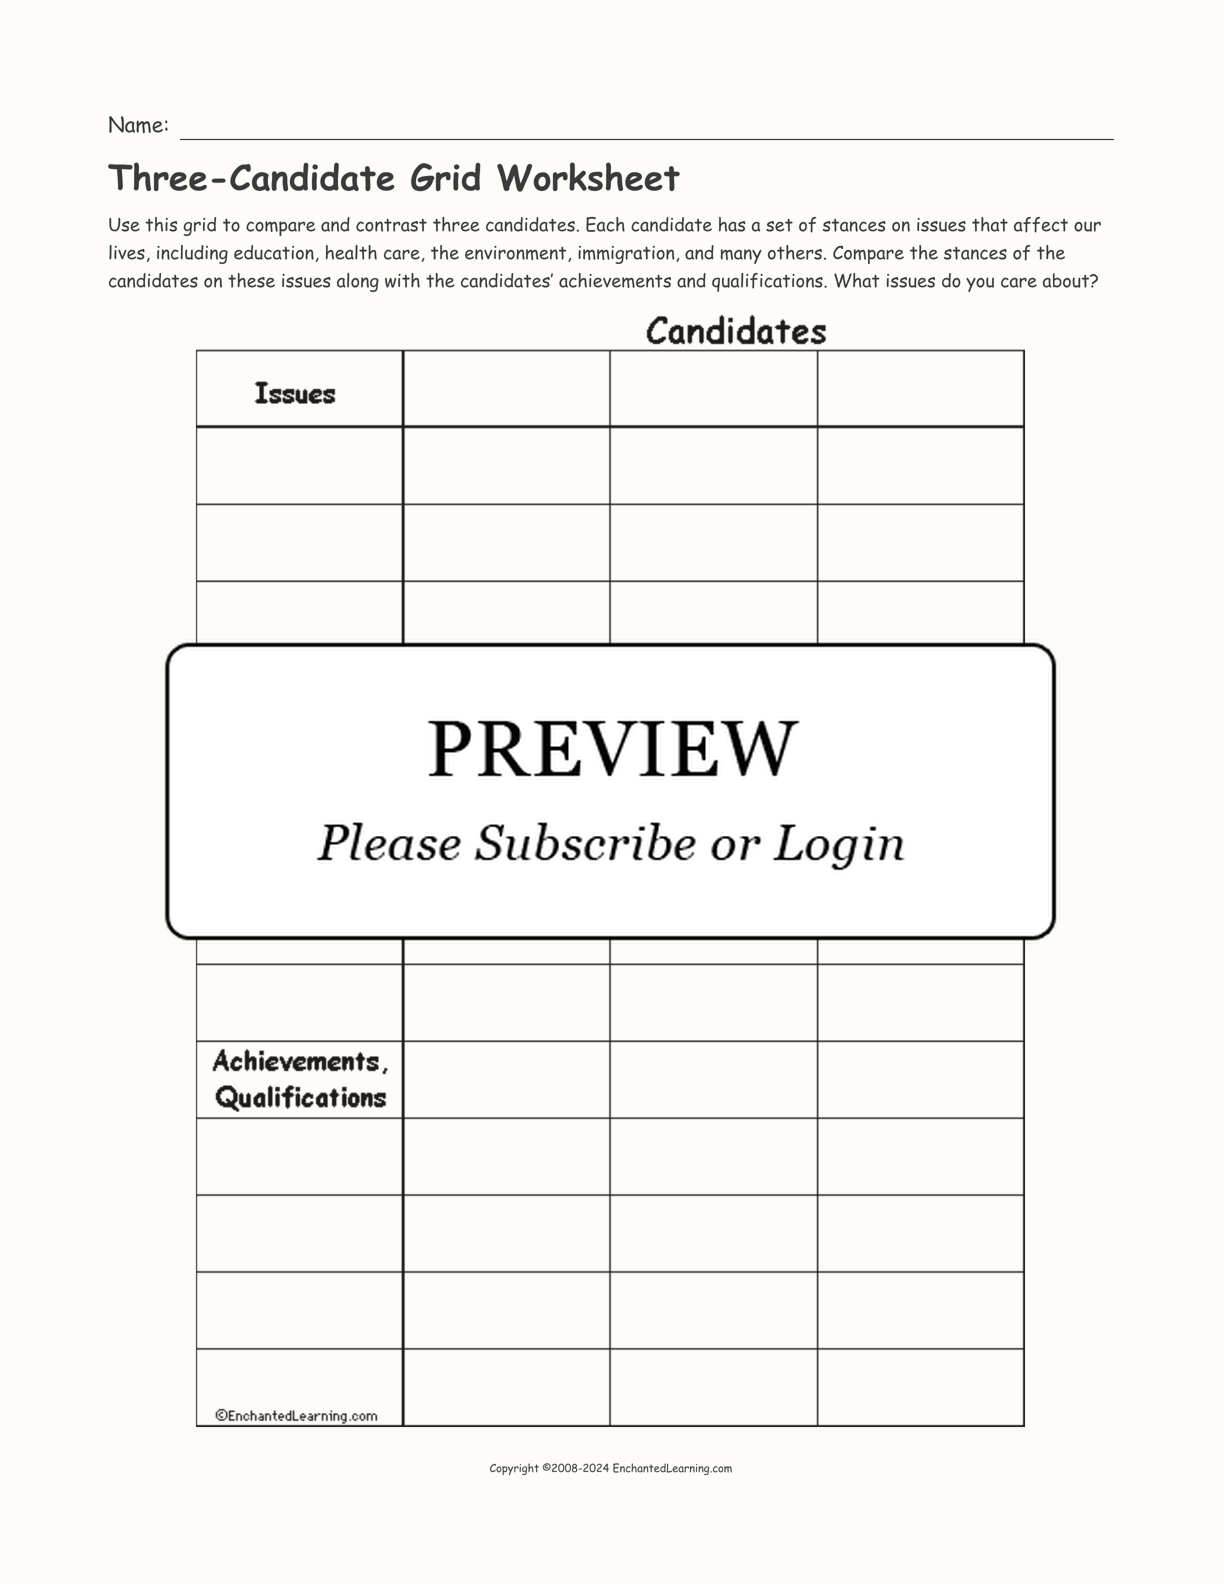 Three-Candidate Grid Worksheet interactive worksheet page 1